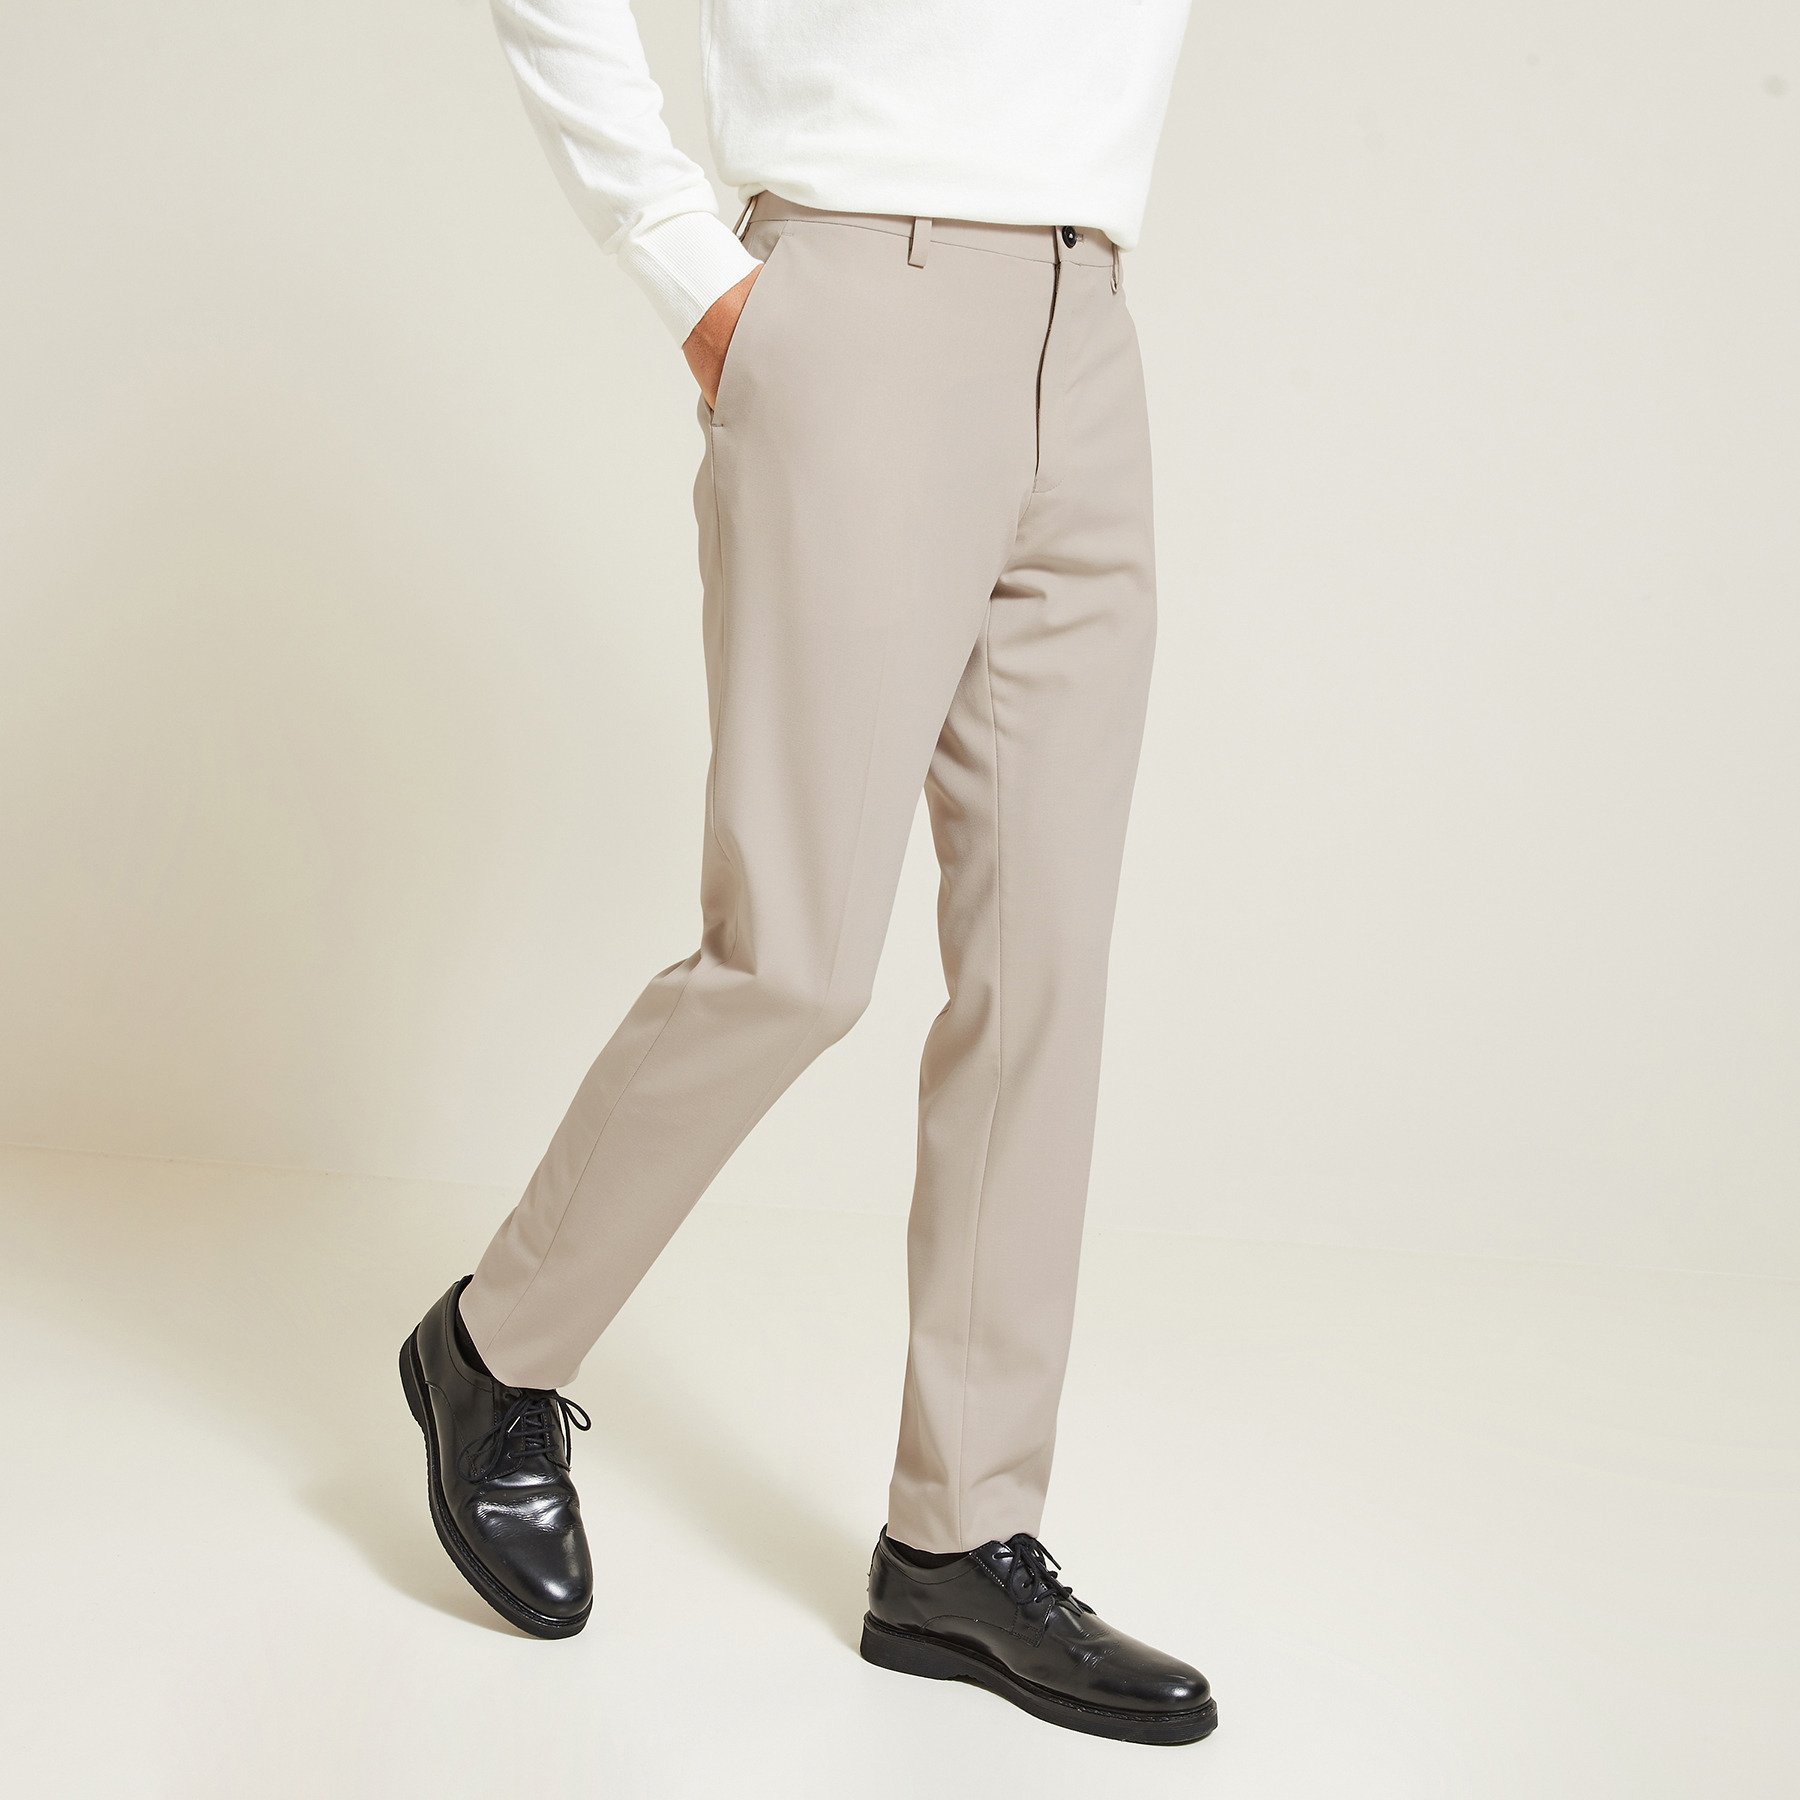 Pantalon de costume extra slim Beige 36 66% Polyester, 28% Viscose, 6% Elasthanne Homme